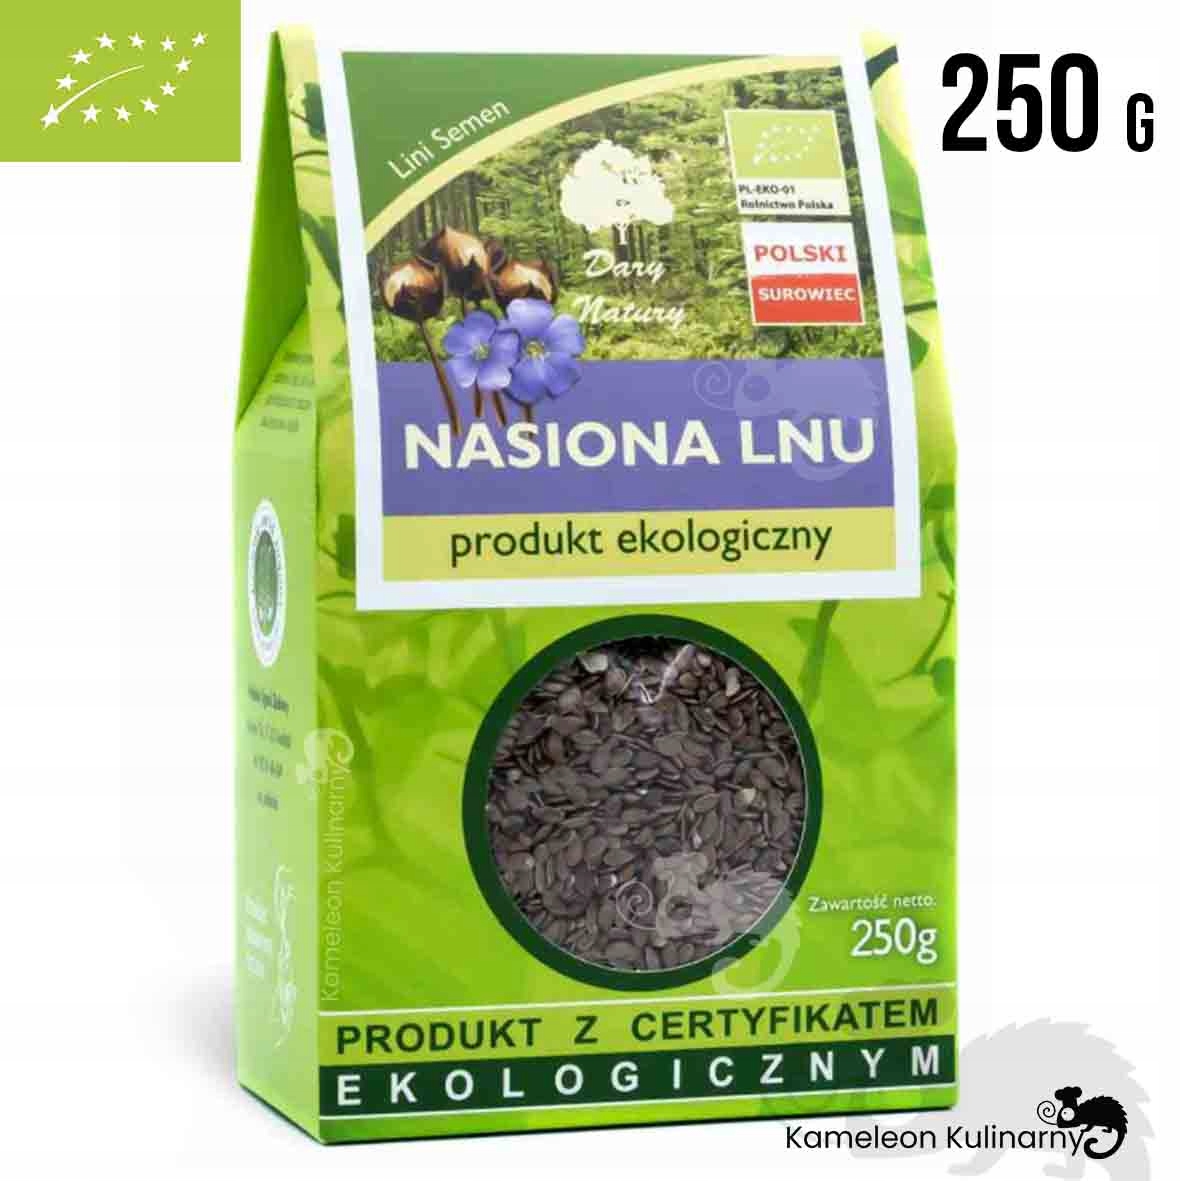 NASIONA LNU LEN ekologiczny DARY NATURY 250g 0,25 EAN 5902741005830